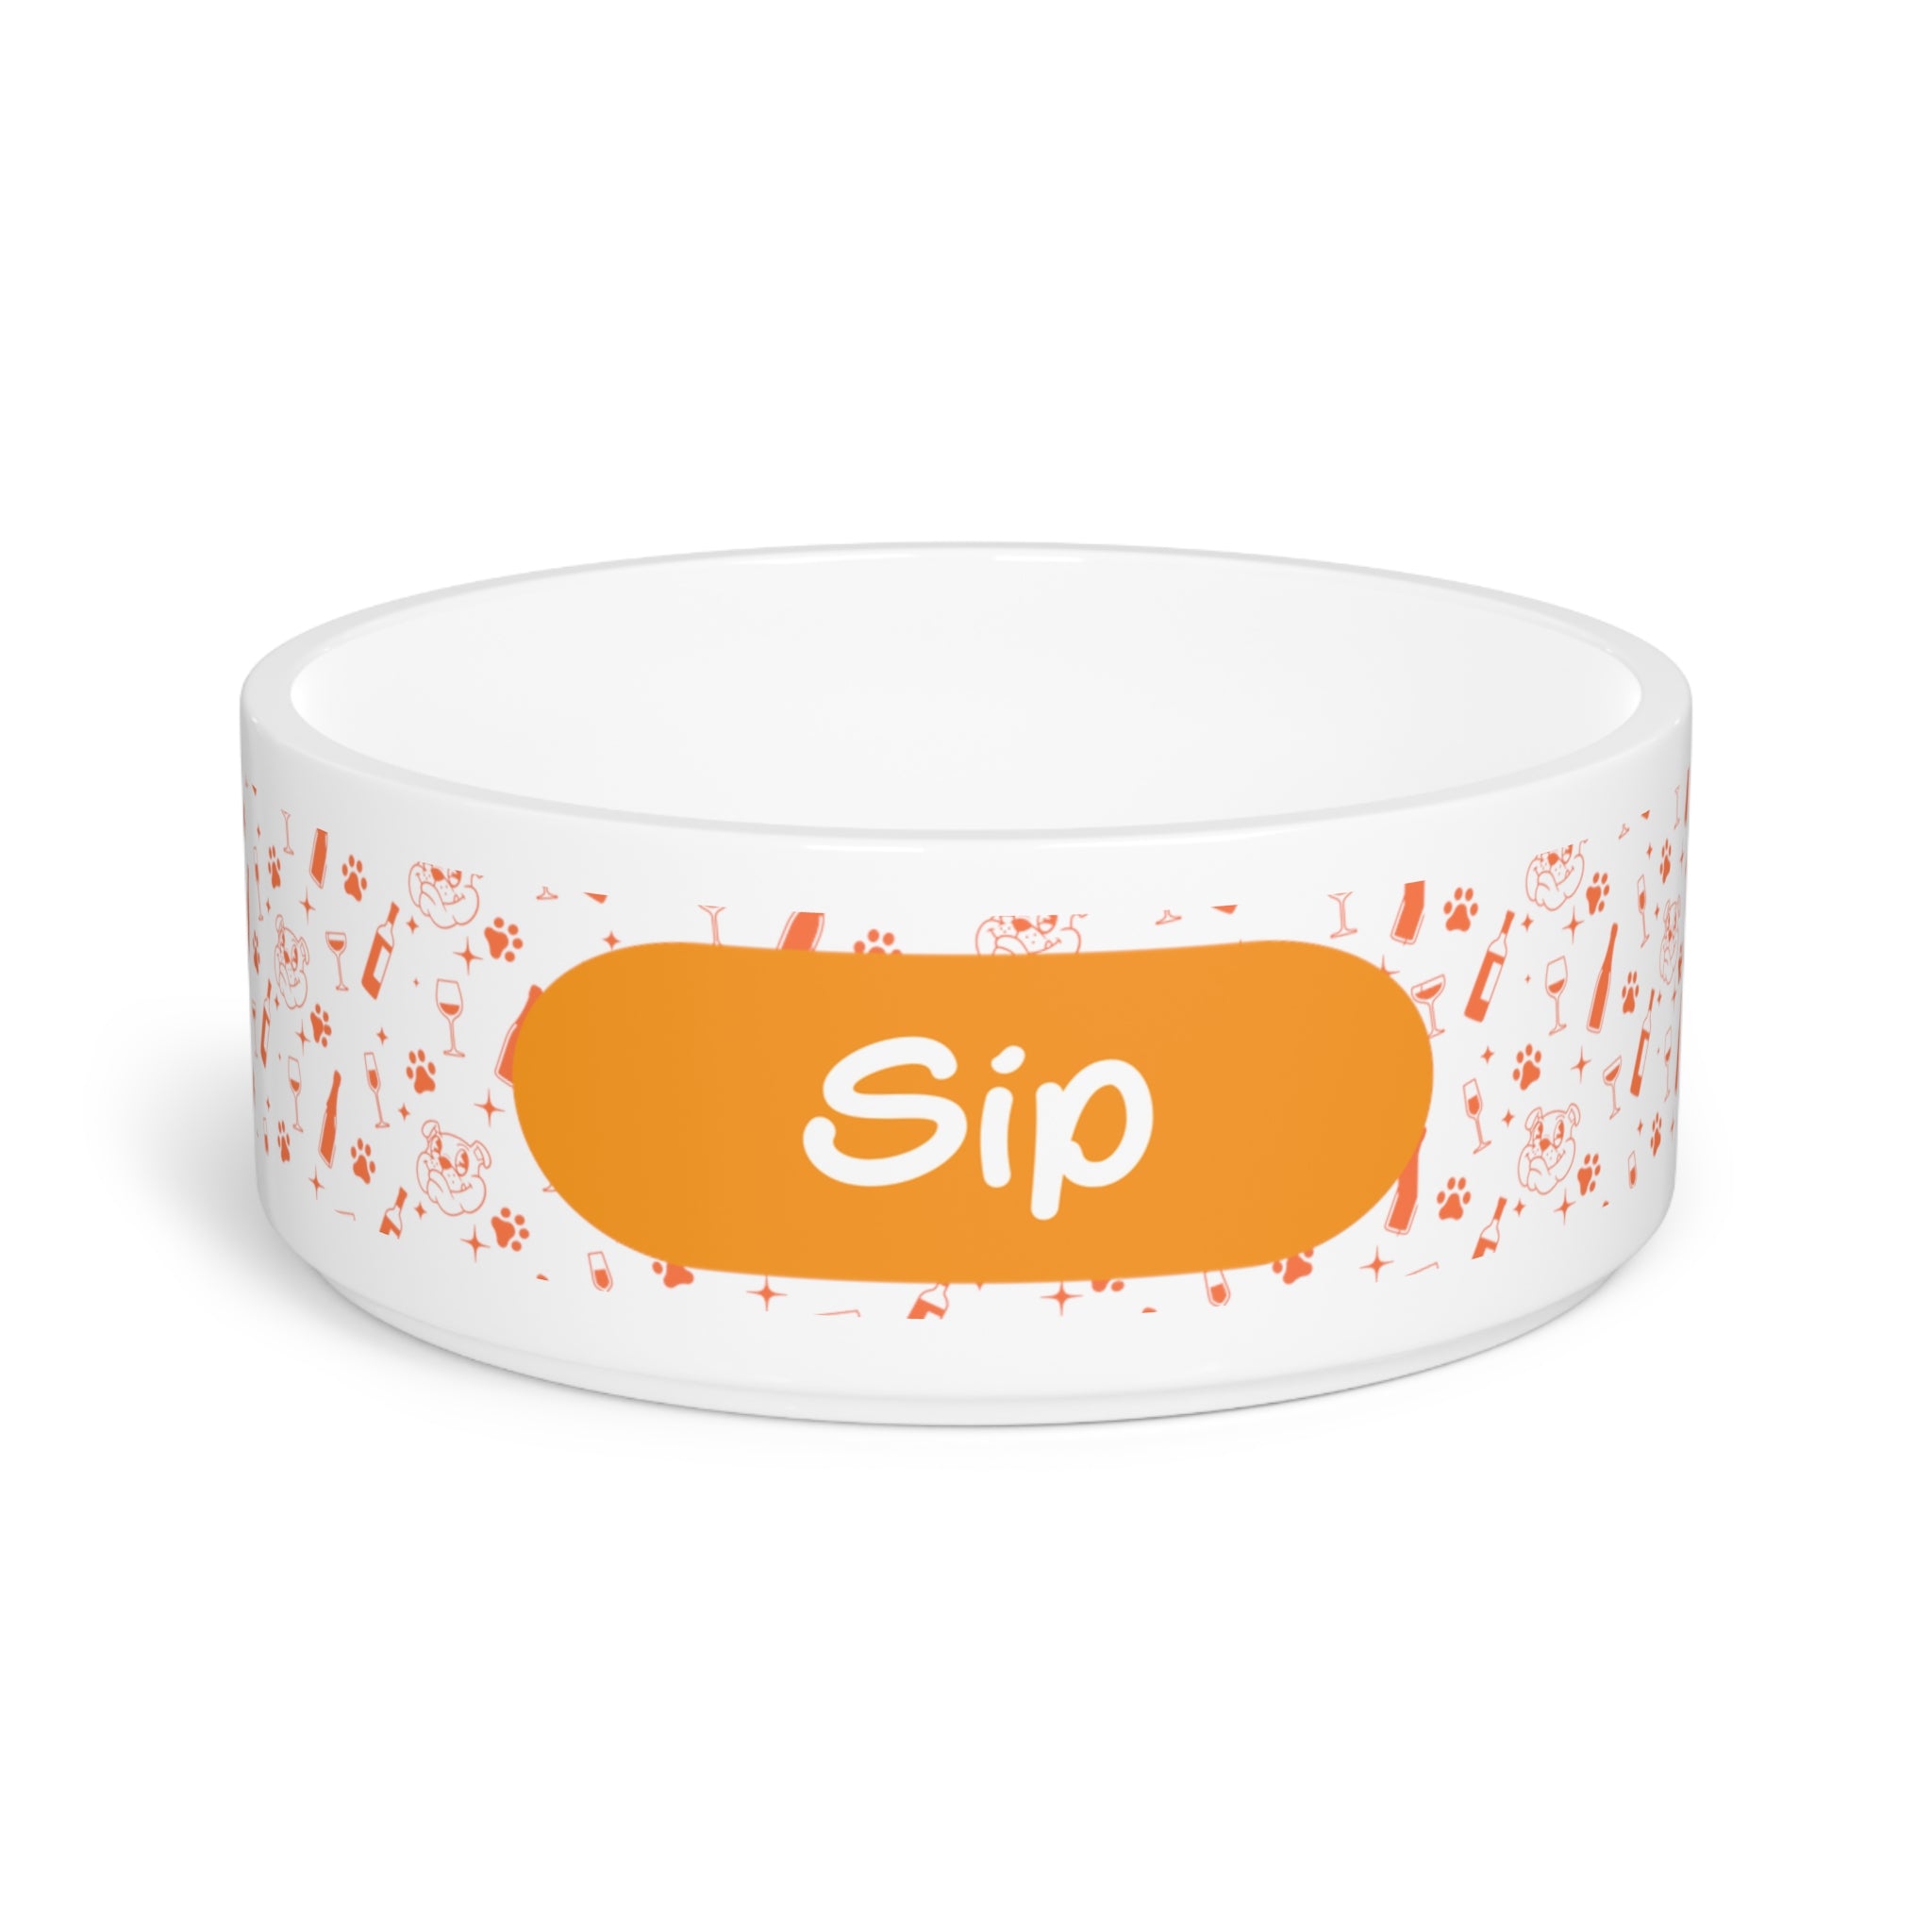 Tipsy Bully "Sip" Dog Water Bowl (Orange)